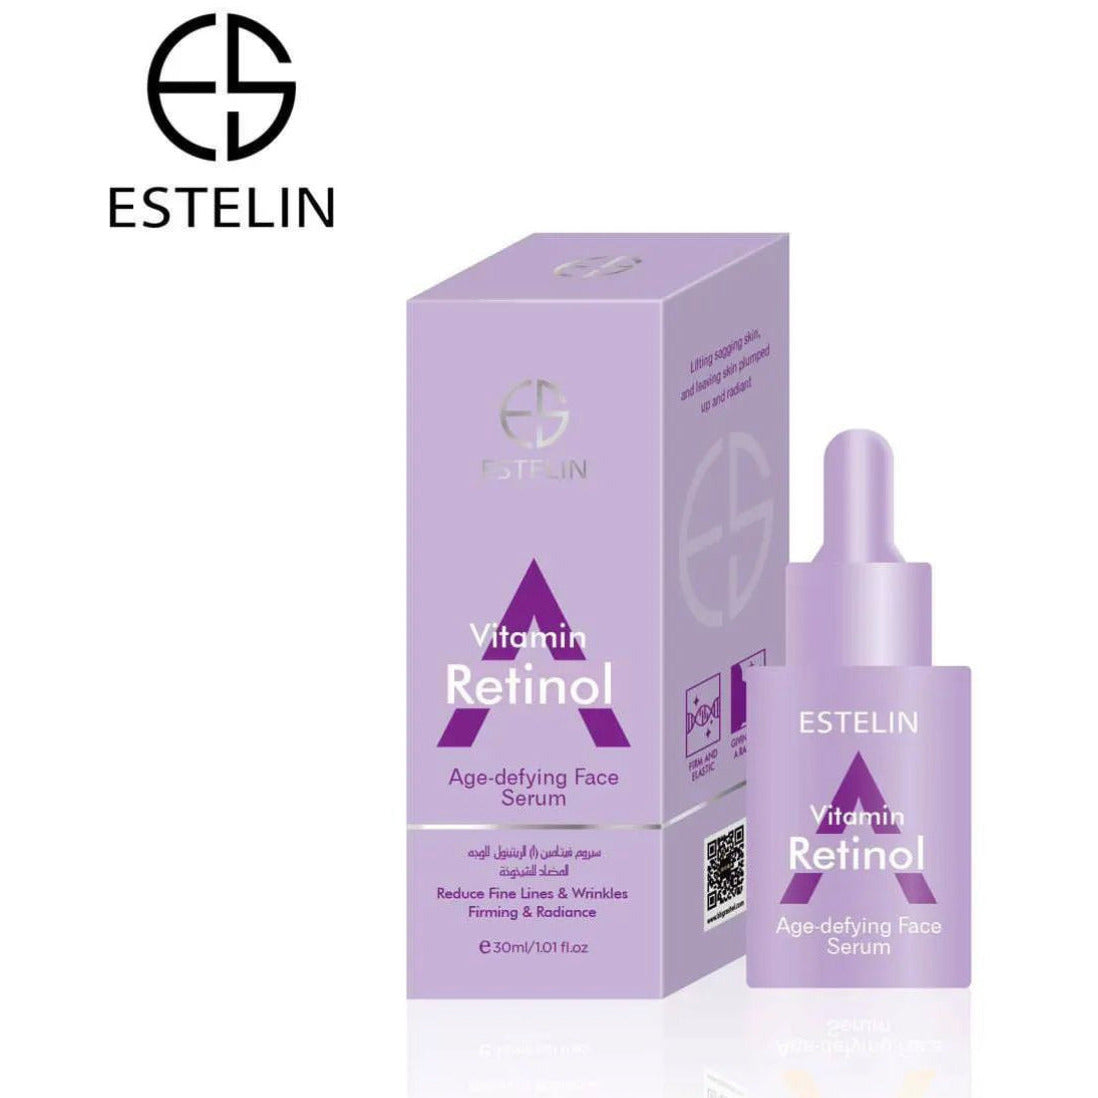 Estelin Vitamin A Retinol Age-Defying Face Serum